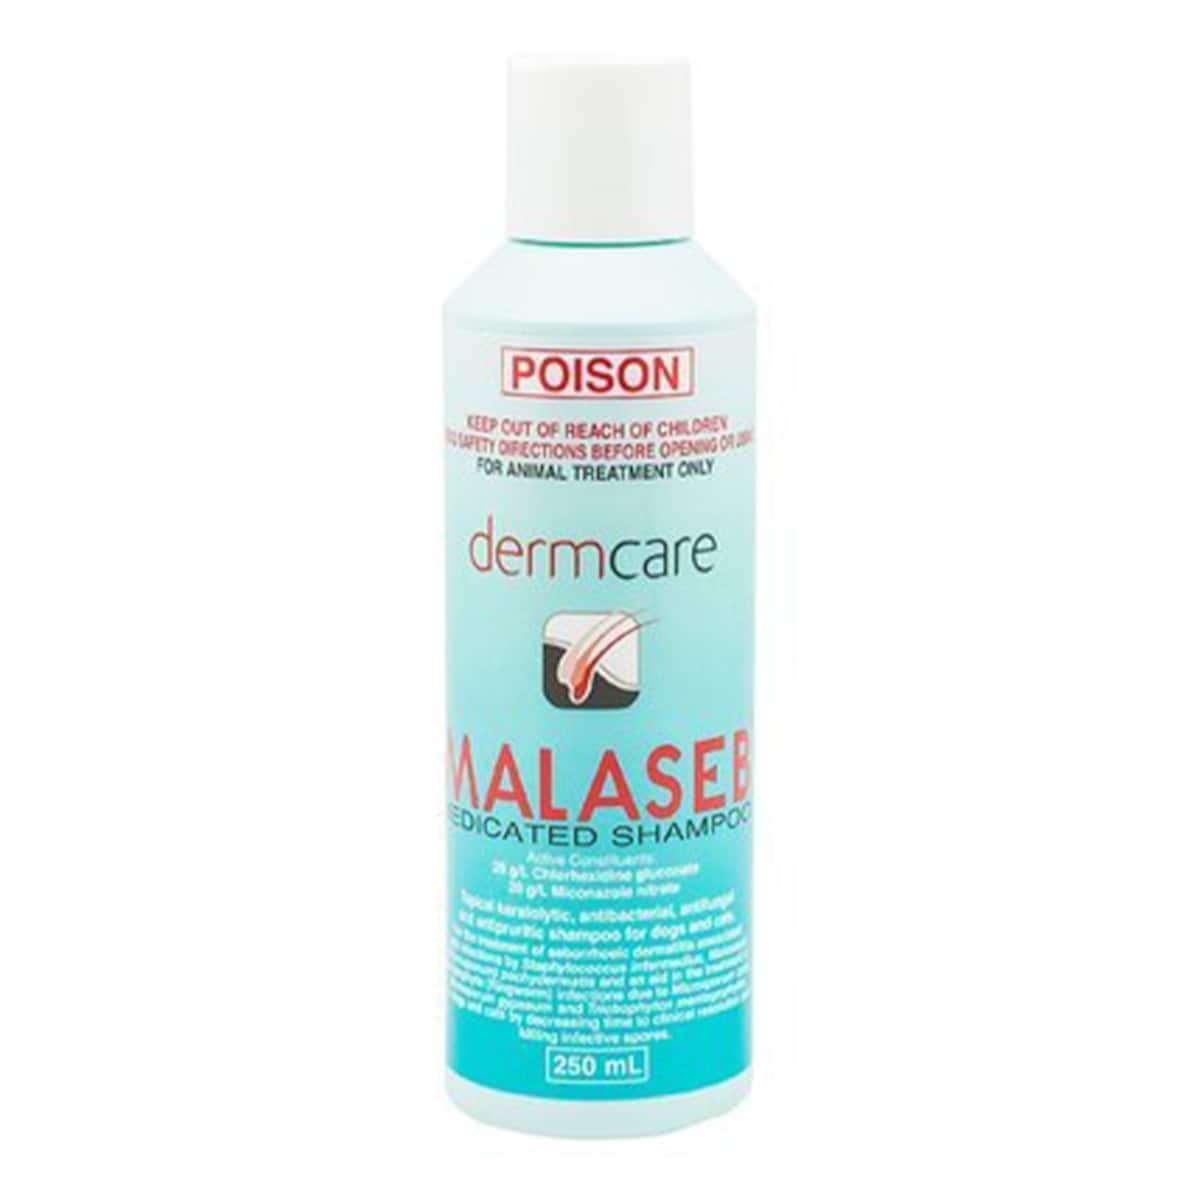 Dermcare Malaseb Medicated Shampoo 250ml